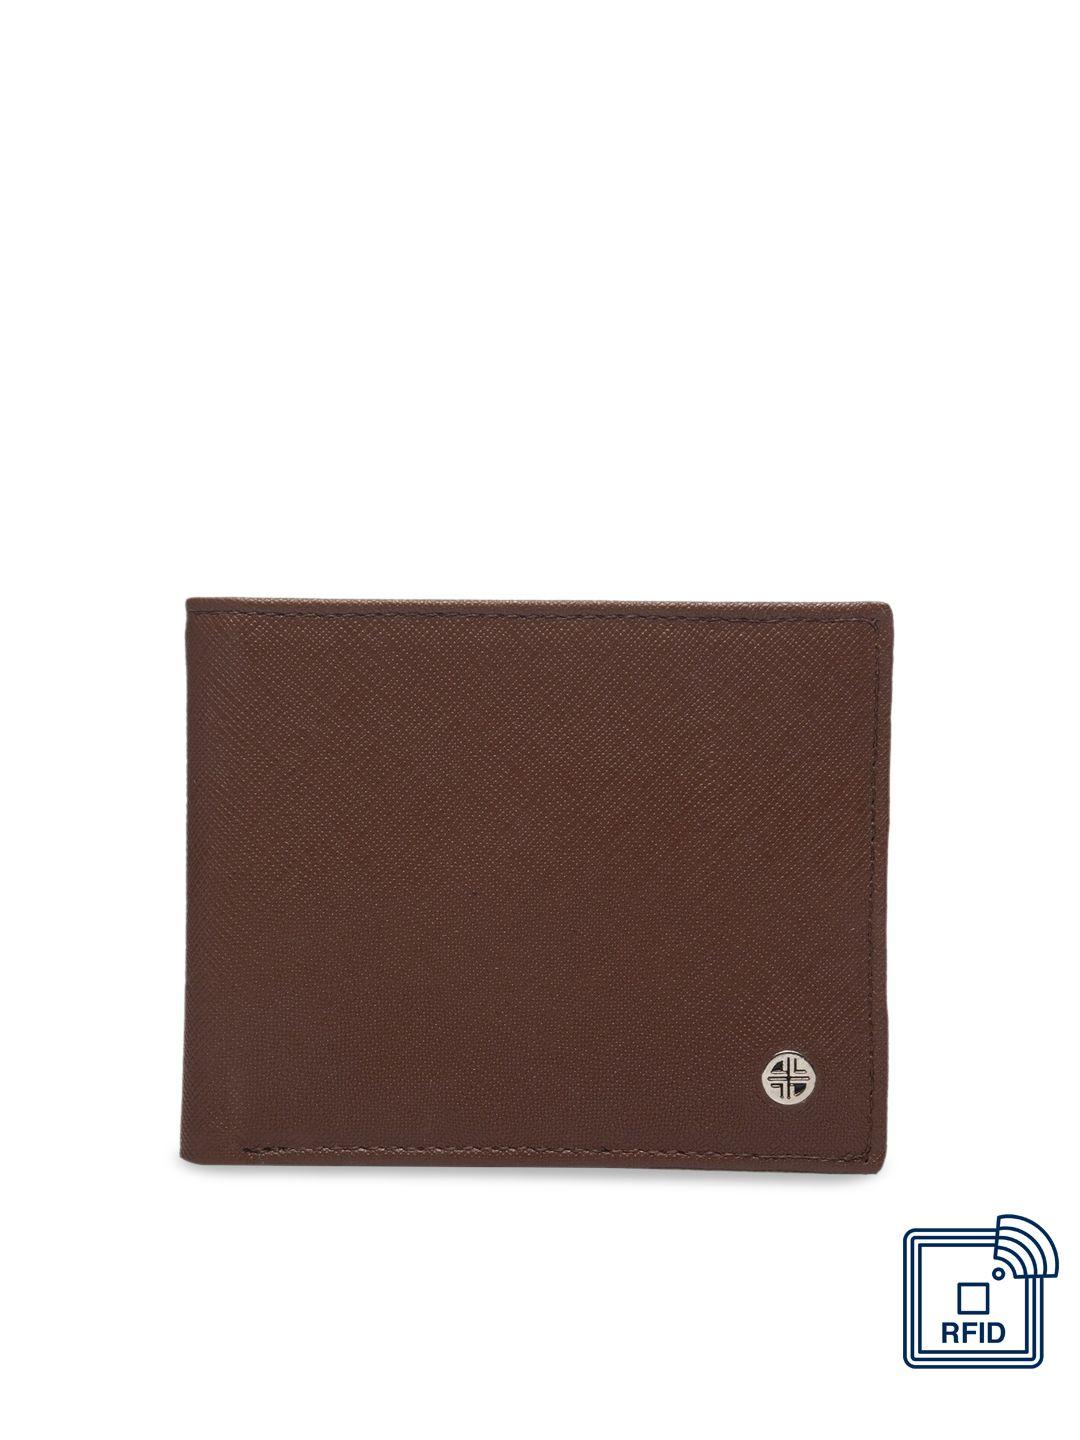 carlton london men brown rfid leather two fold wallet